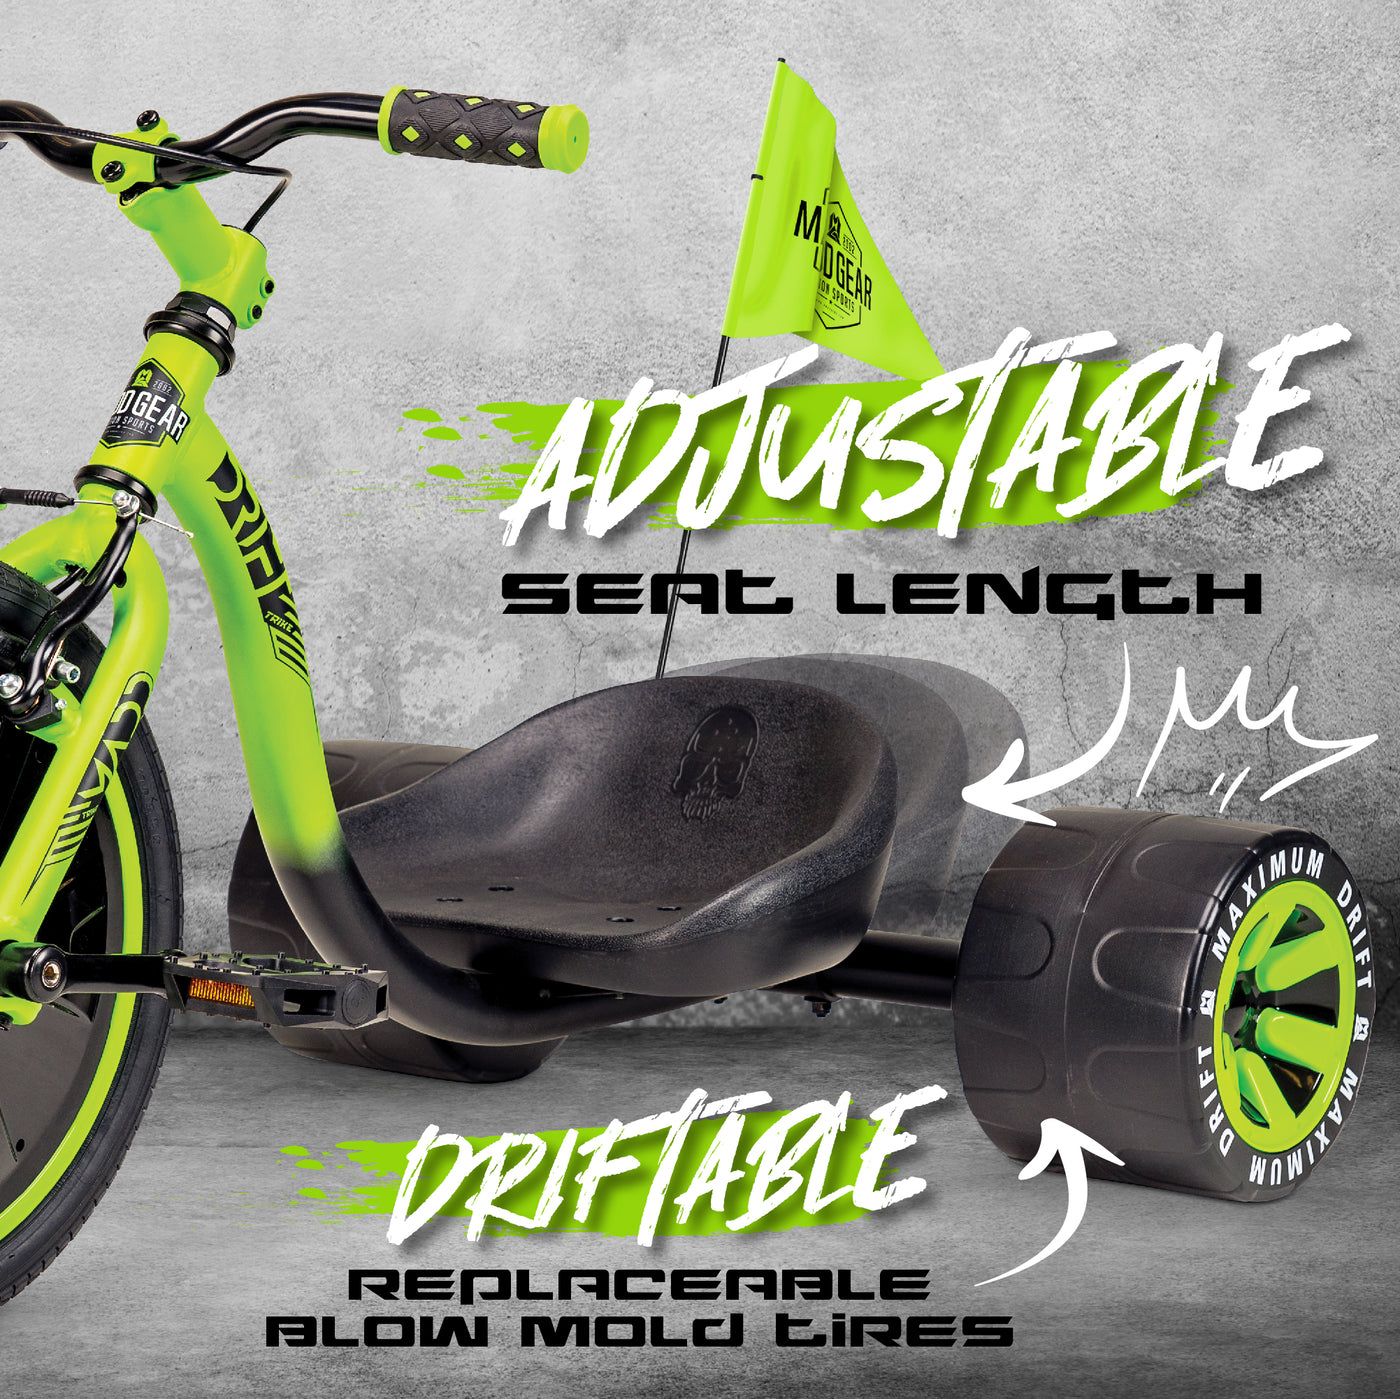 Madd Gear Drift Trike Huffy Green Machine Drifter Tricycle Adjustable Seat Green MGP Kids Boys Girls